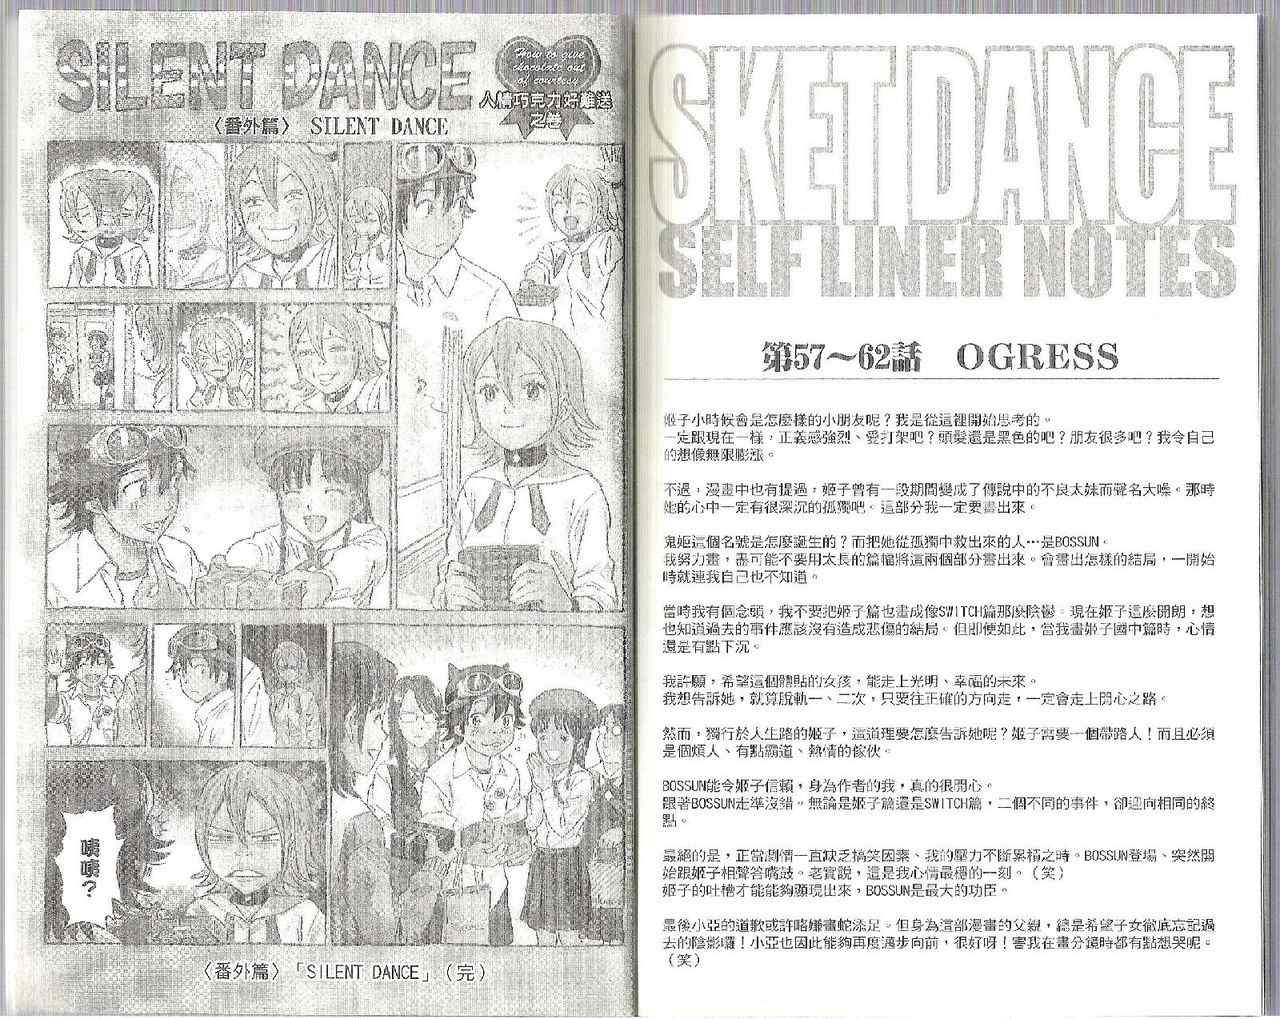 《学园救援团》漫画 sketdance 07卷